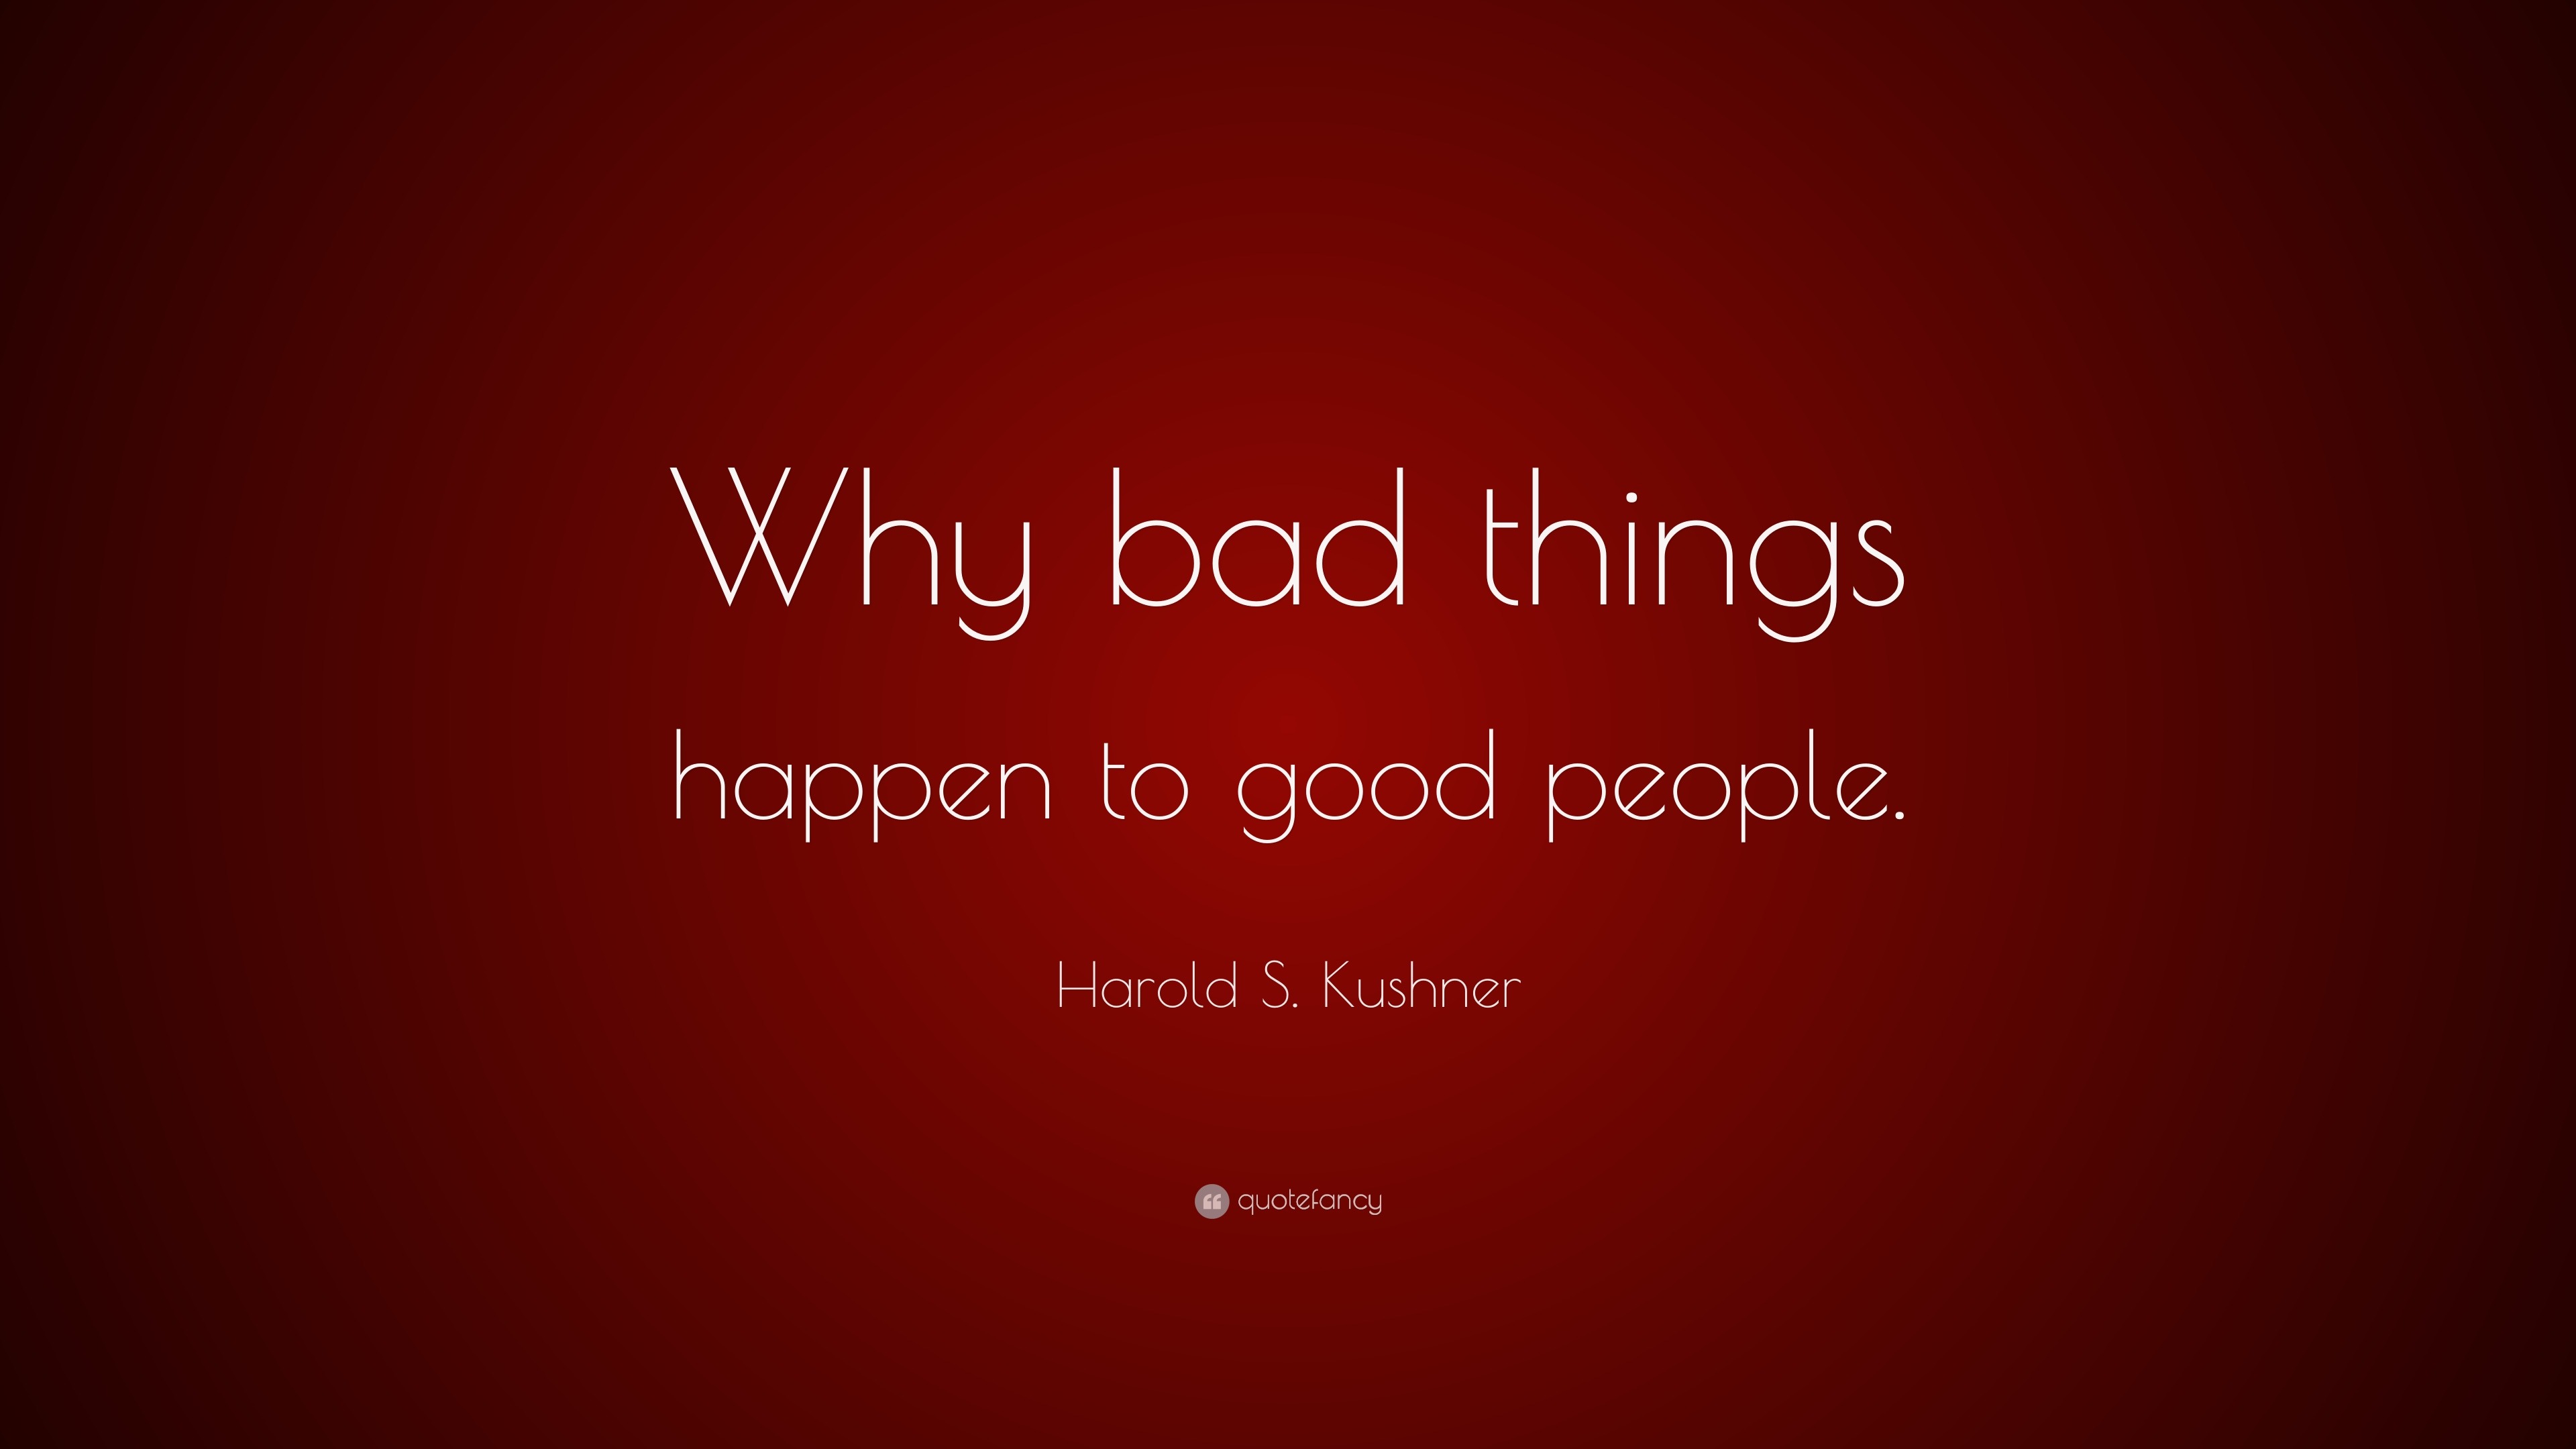 harold kushner when bad things happen to good people